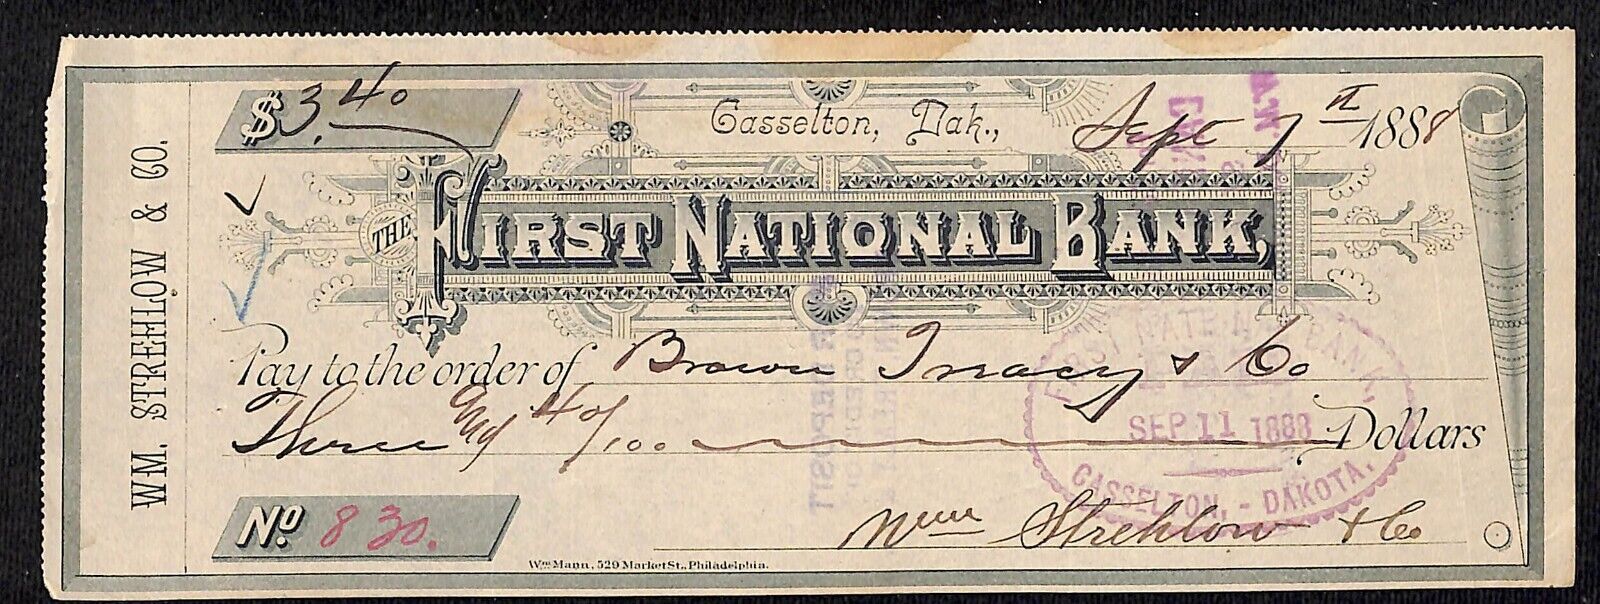 Gasselton, Dakota (Territory) First National $3.40 Bank Check Strehlow & Co 1888